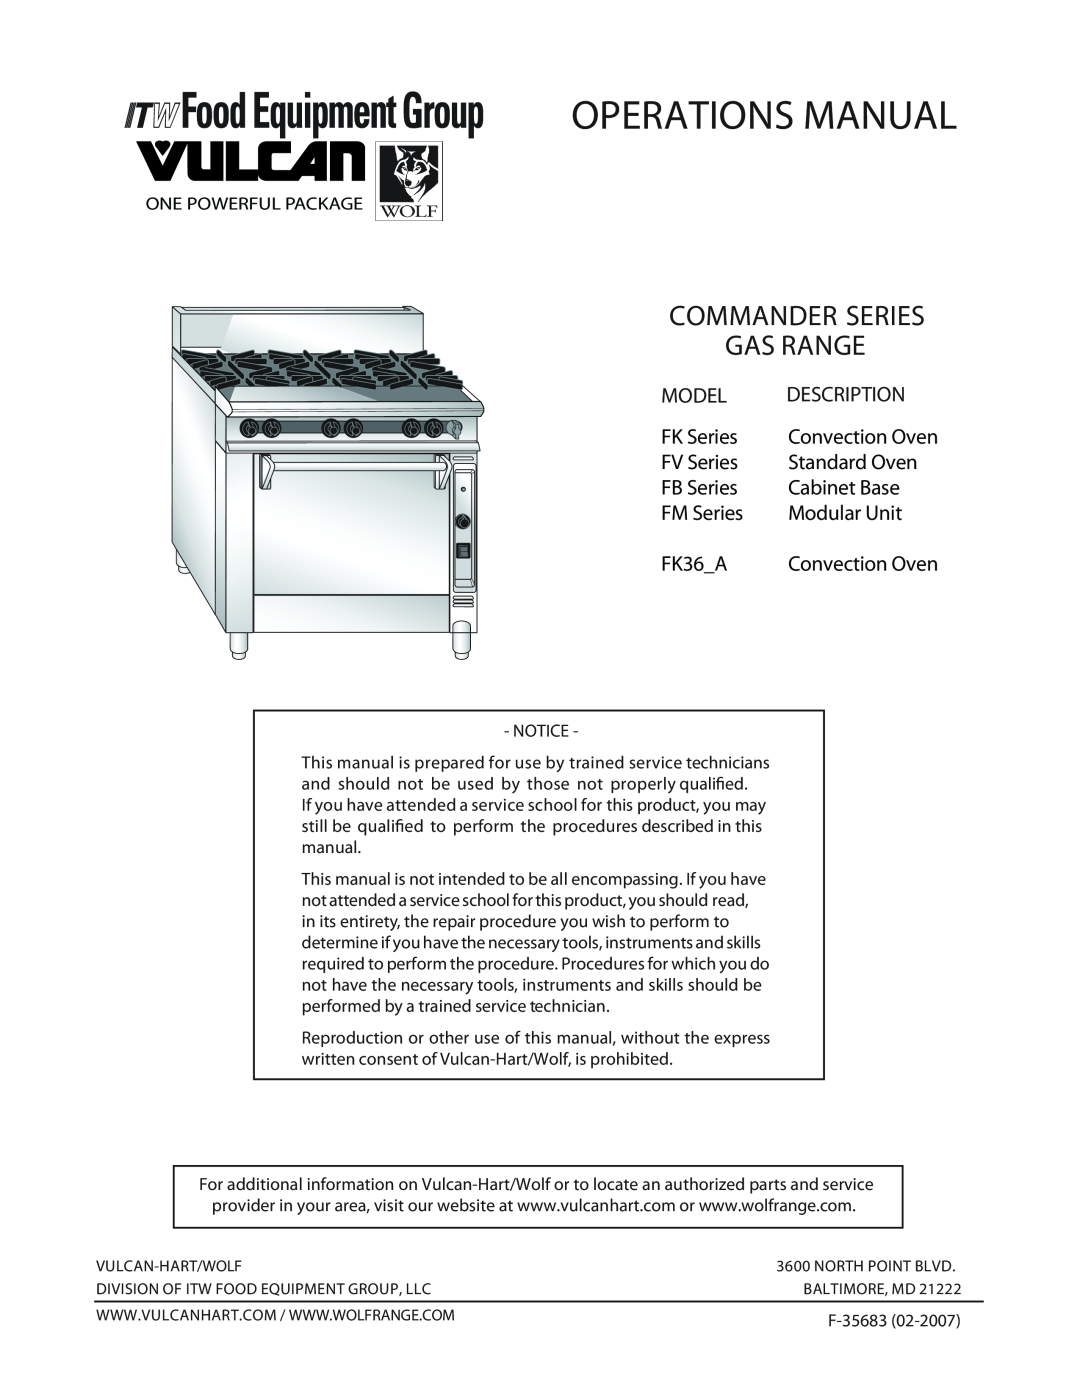 Vulcan-Hart manual Operations Manual, Commander Series Gas Range, Model, Description, FK Series, FV Series, FB Series 